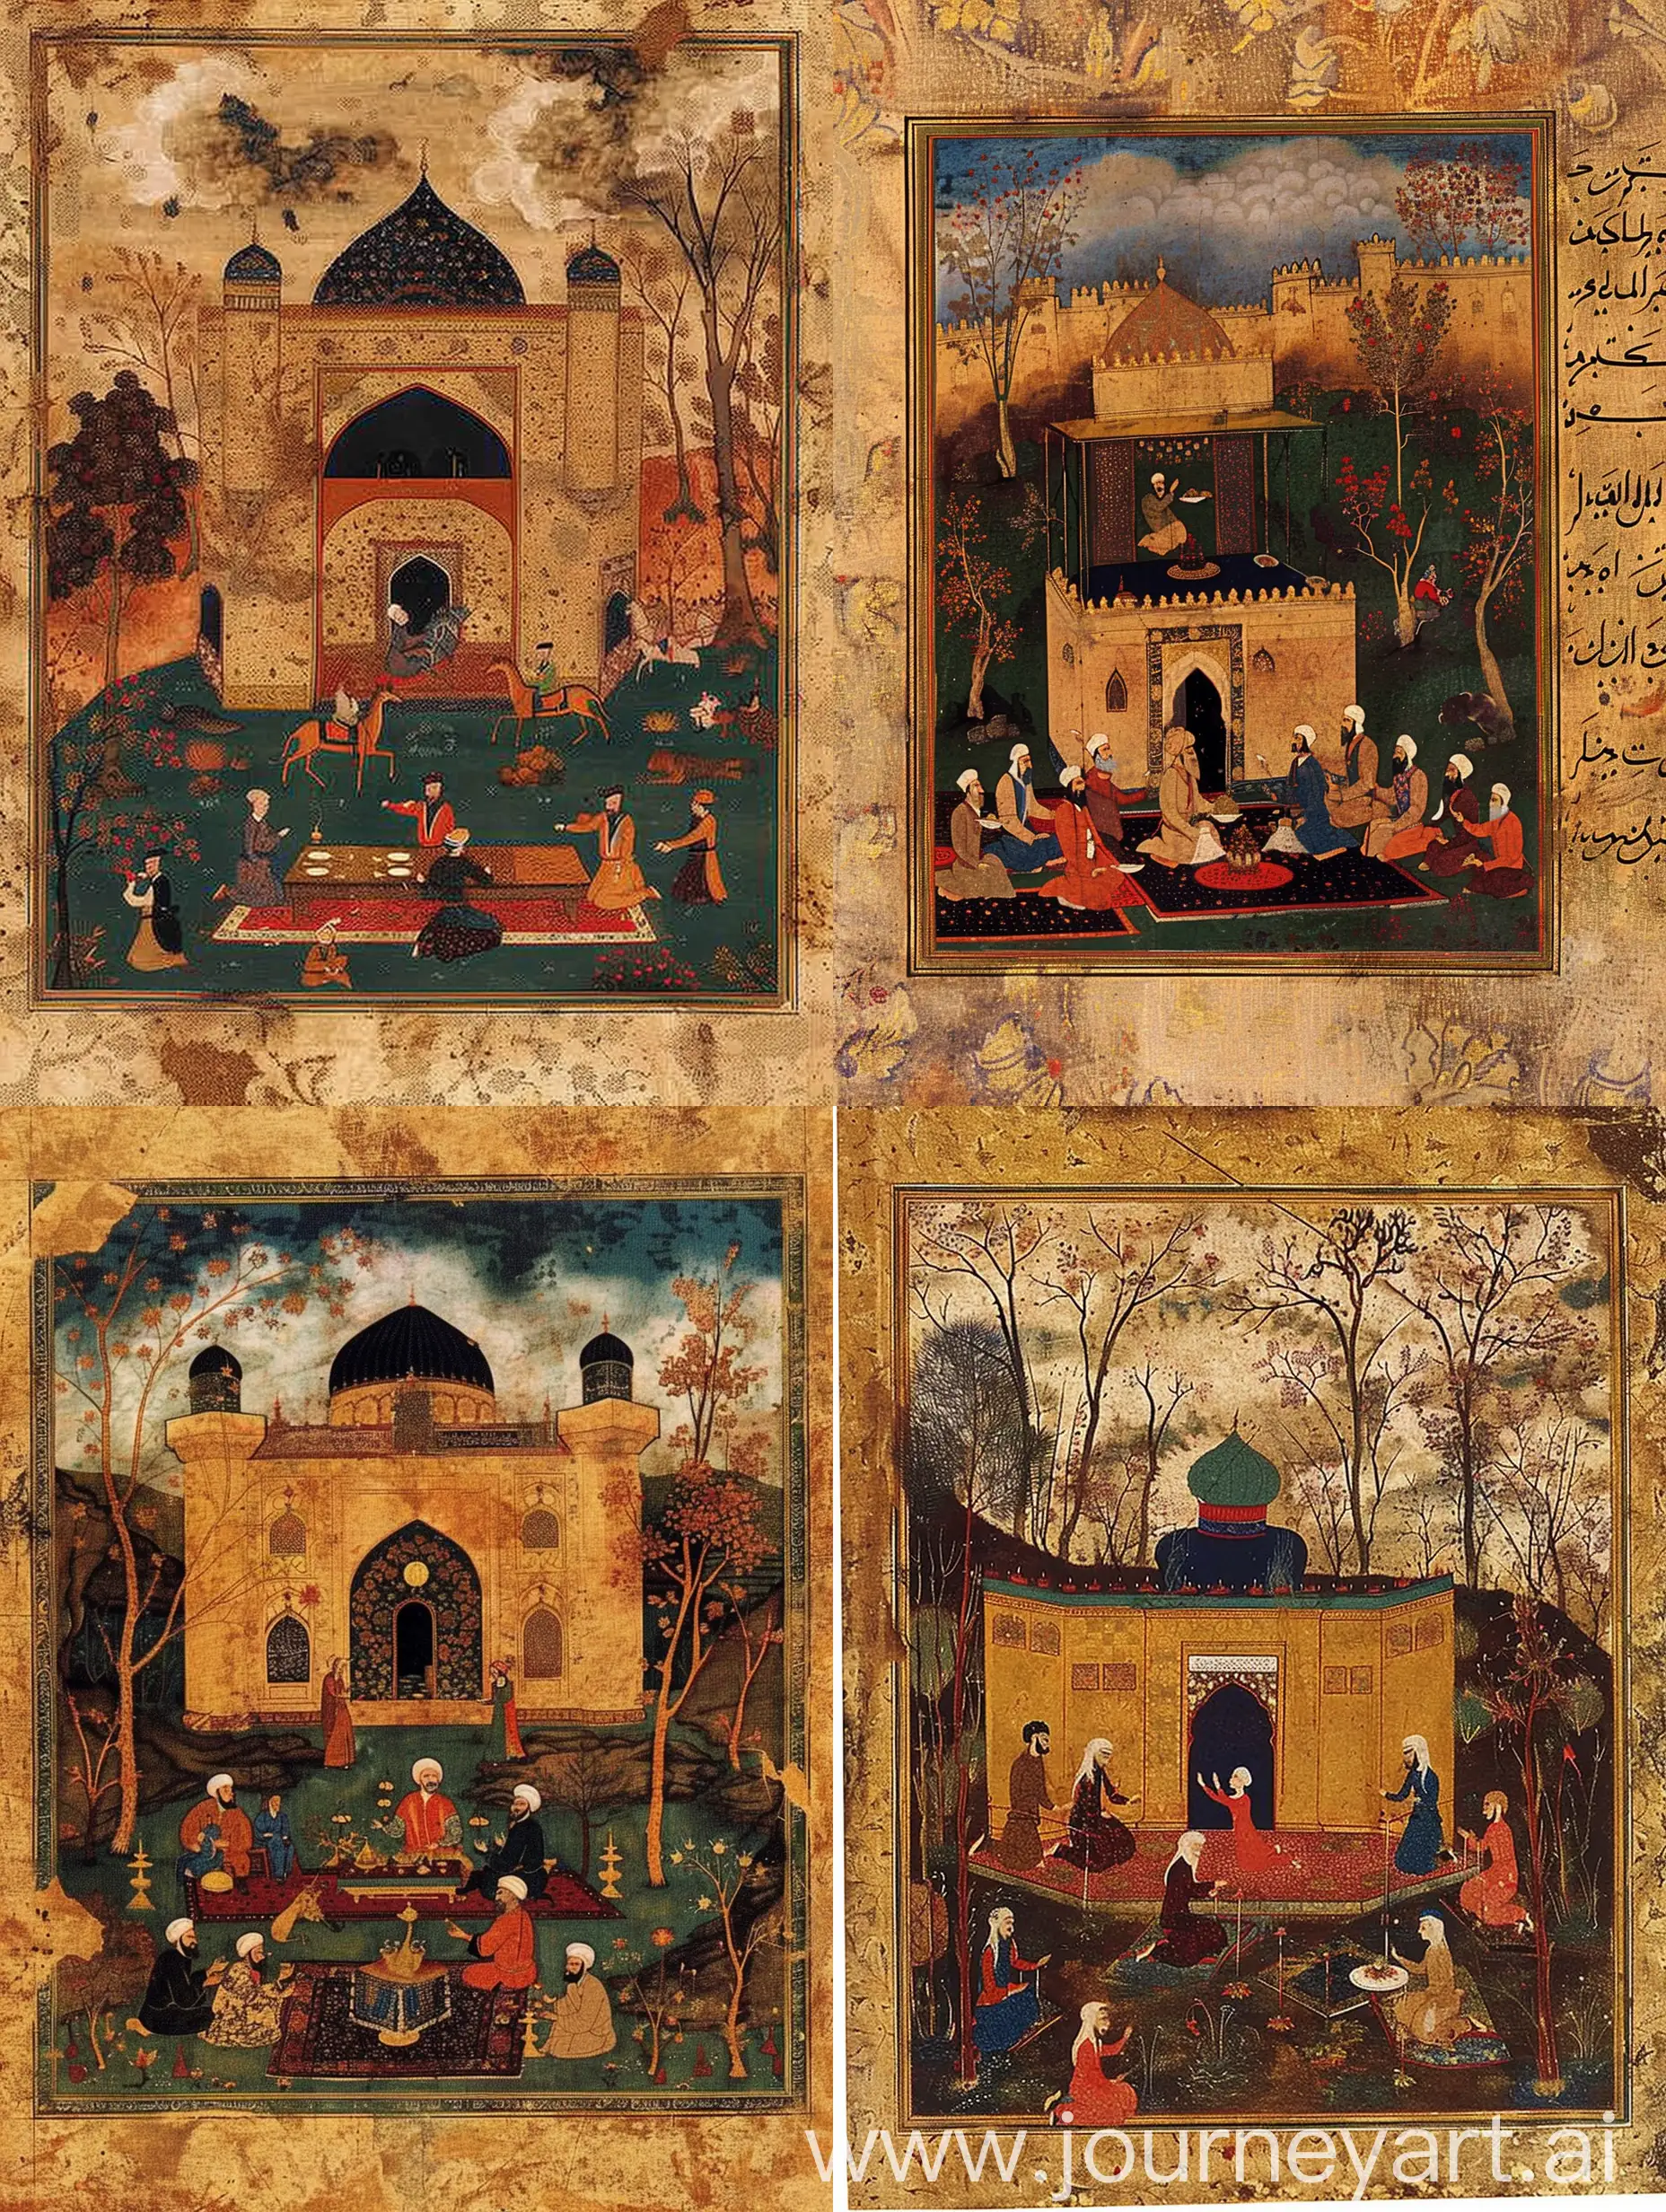 Islamic-Castle-Banquet-in-Persian-Garden-under-Cloudy-Sky